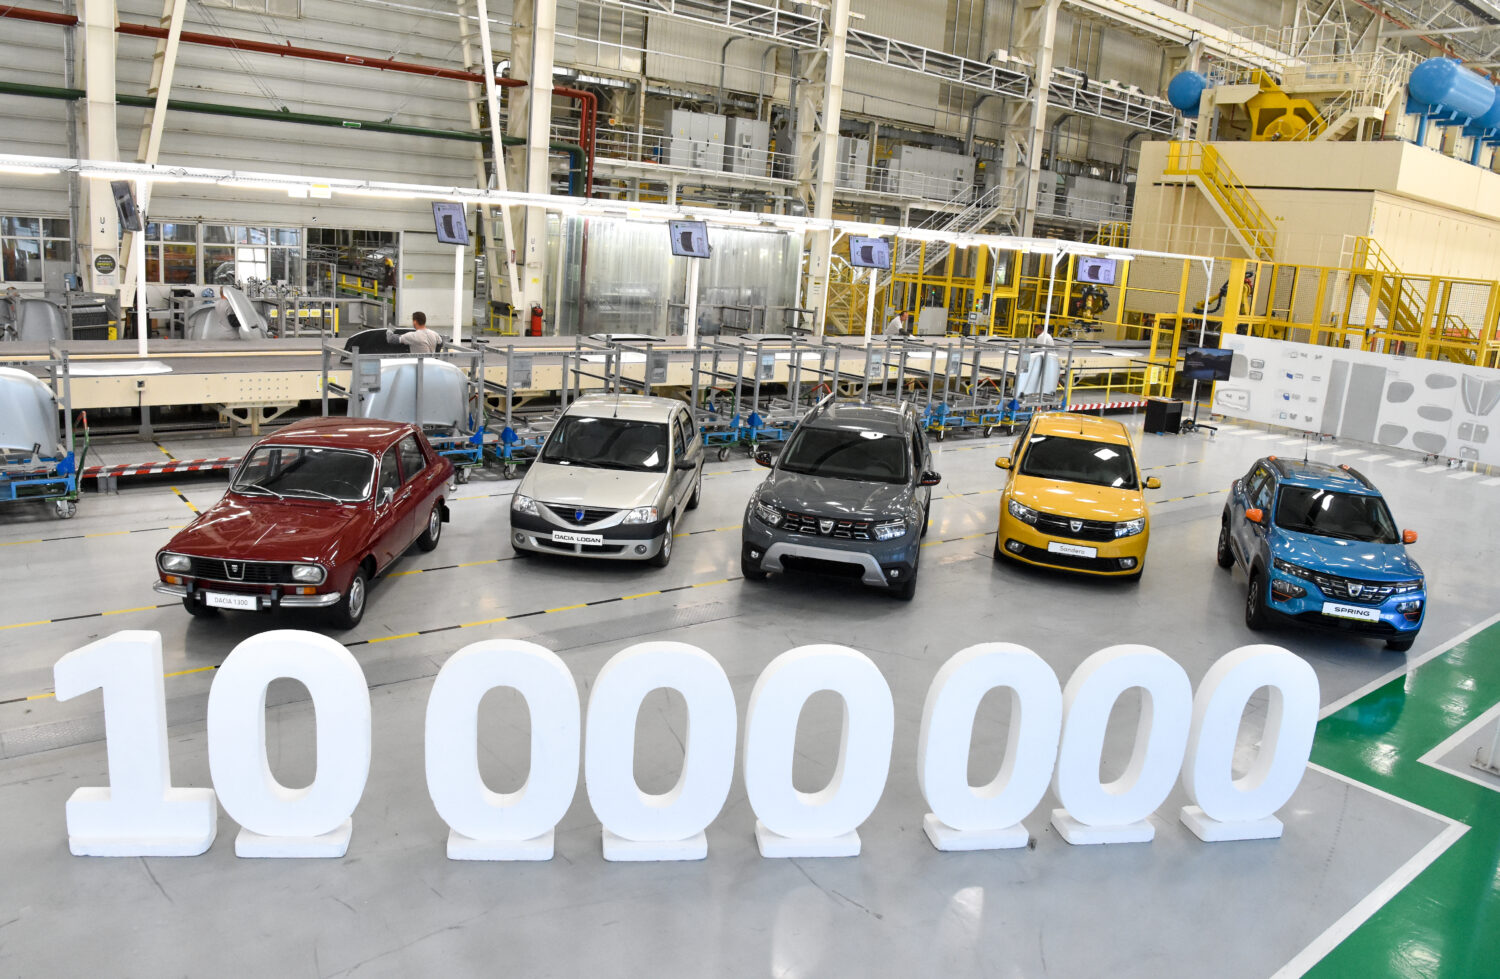 2022 - 10 Millions Dacia produced